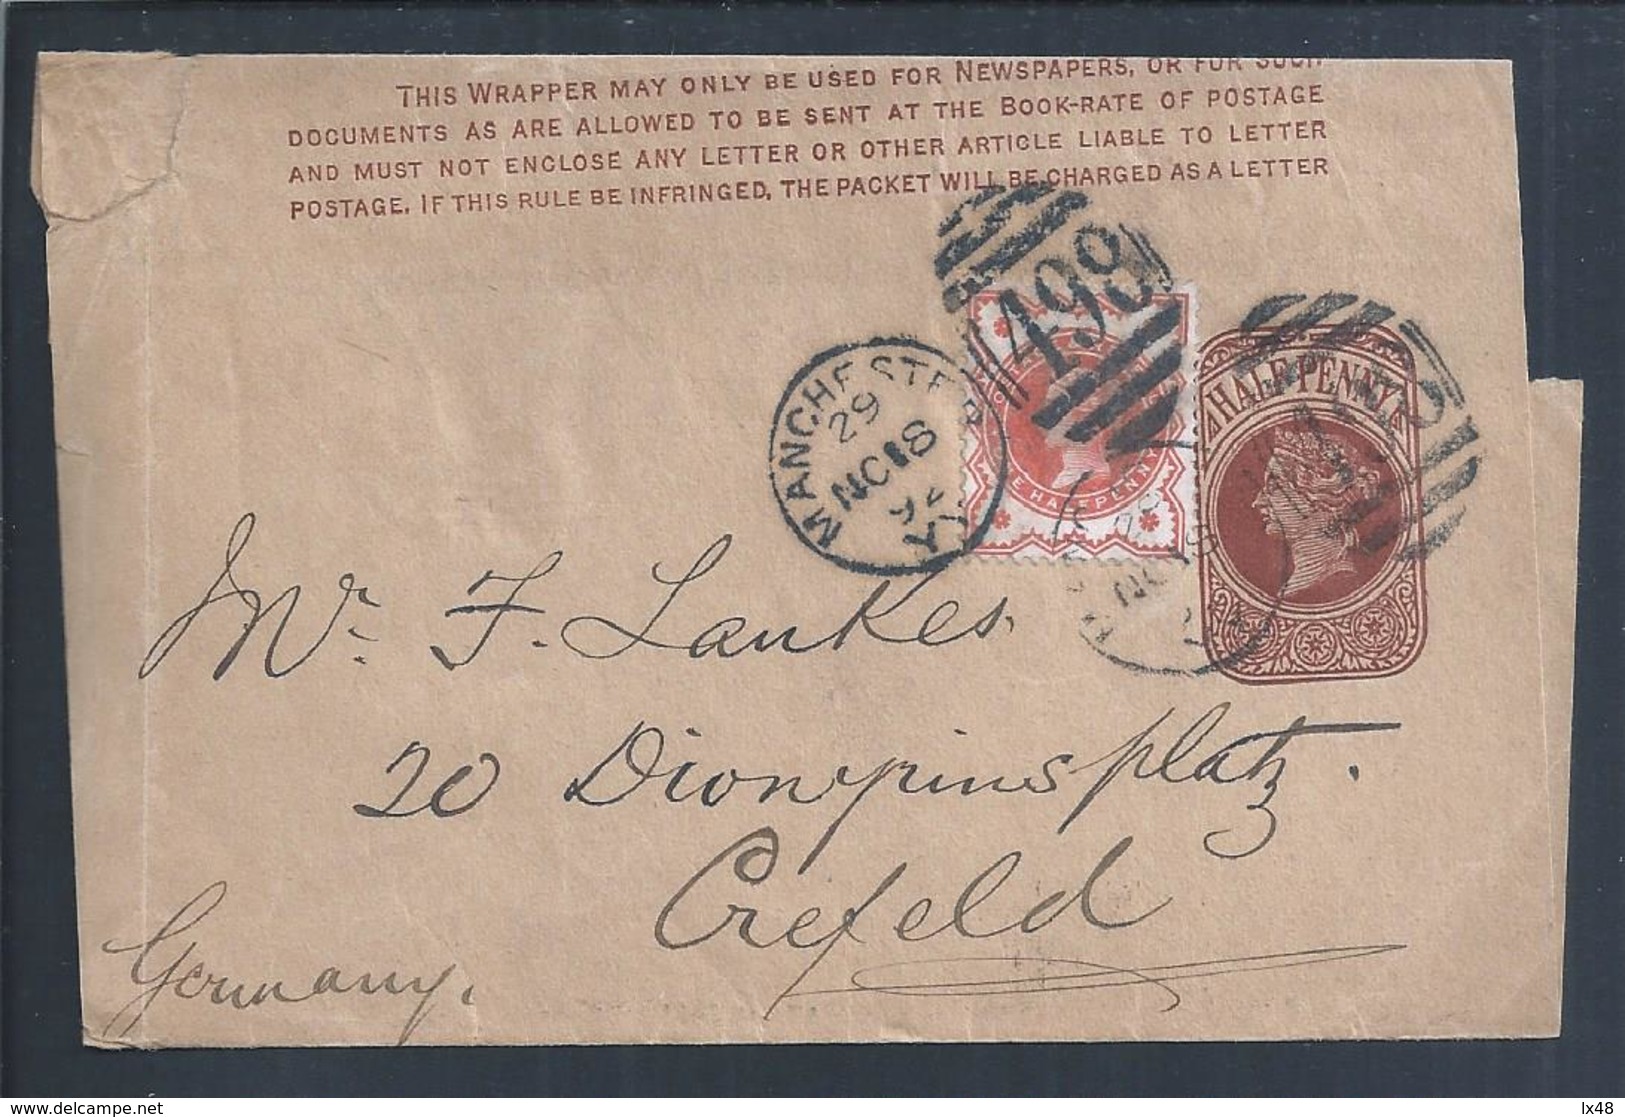 Stationery Newspaper Strap With Additional Stamp From Manchester To Crefeld, Germany. Briefpapier-Zeitungsband Mit Zusät - Storia Postale